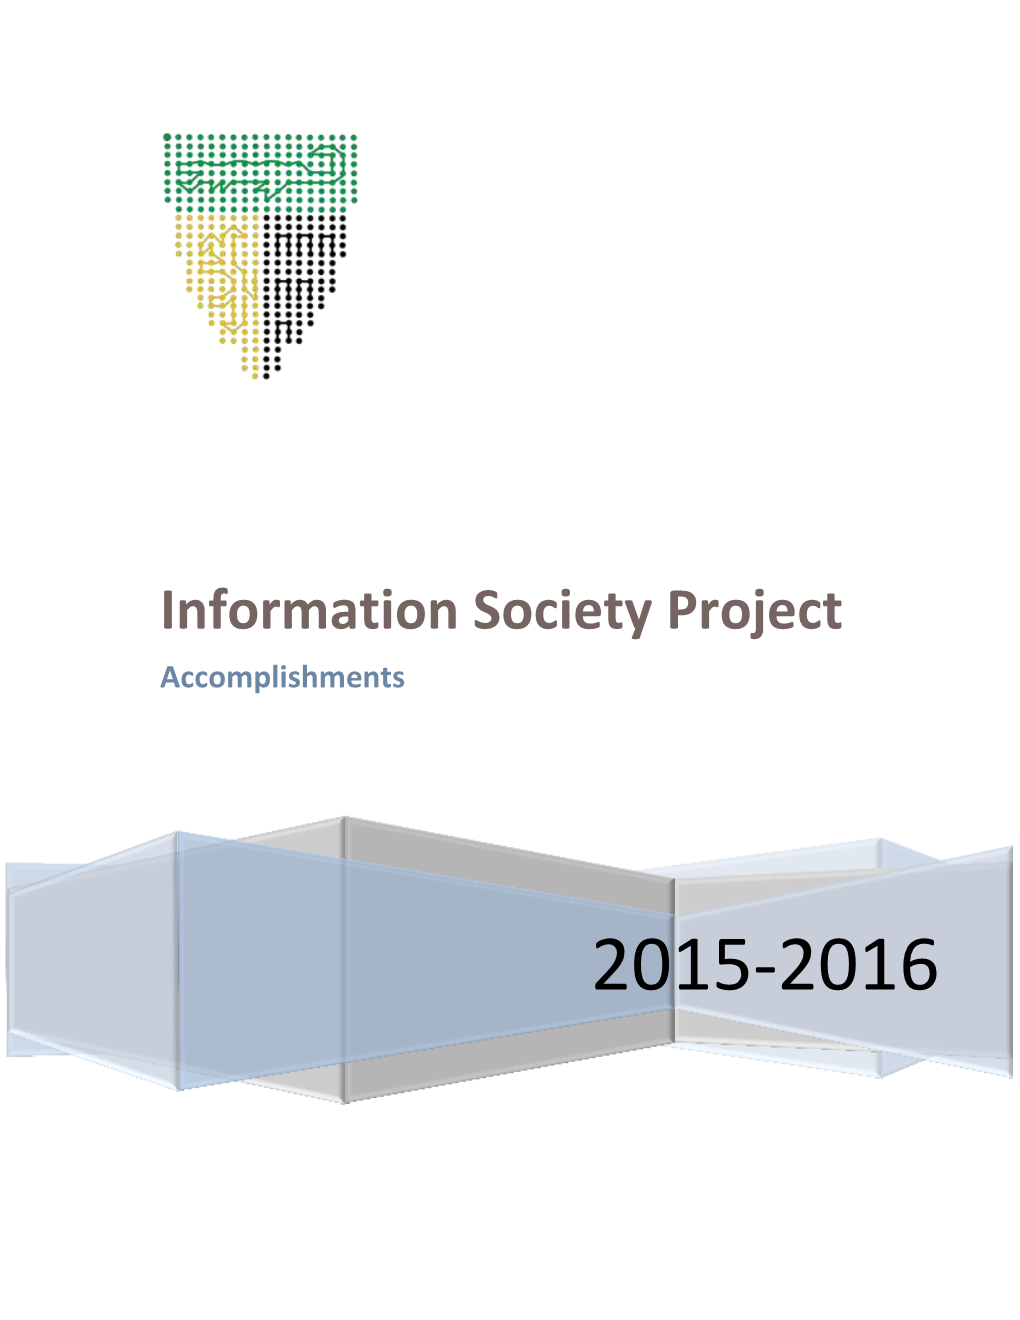 Information Society Project Accomplishments